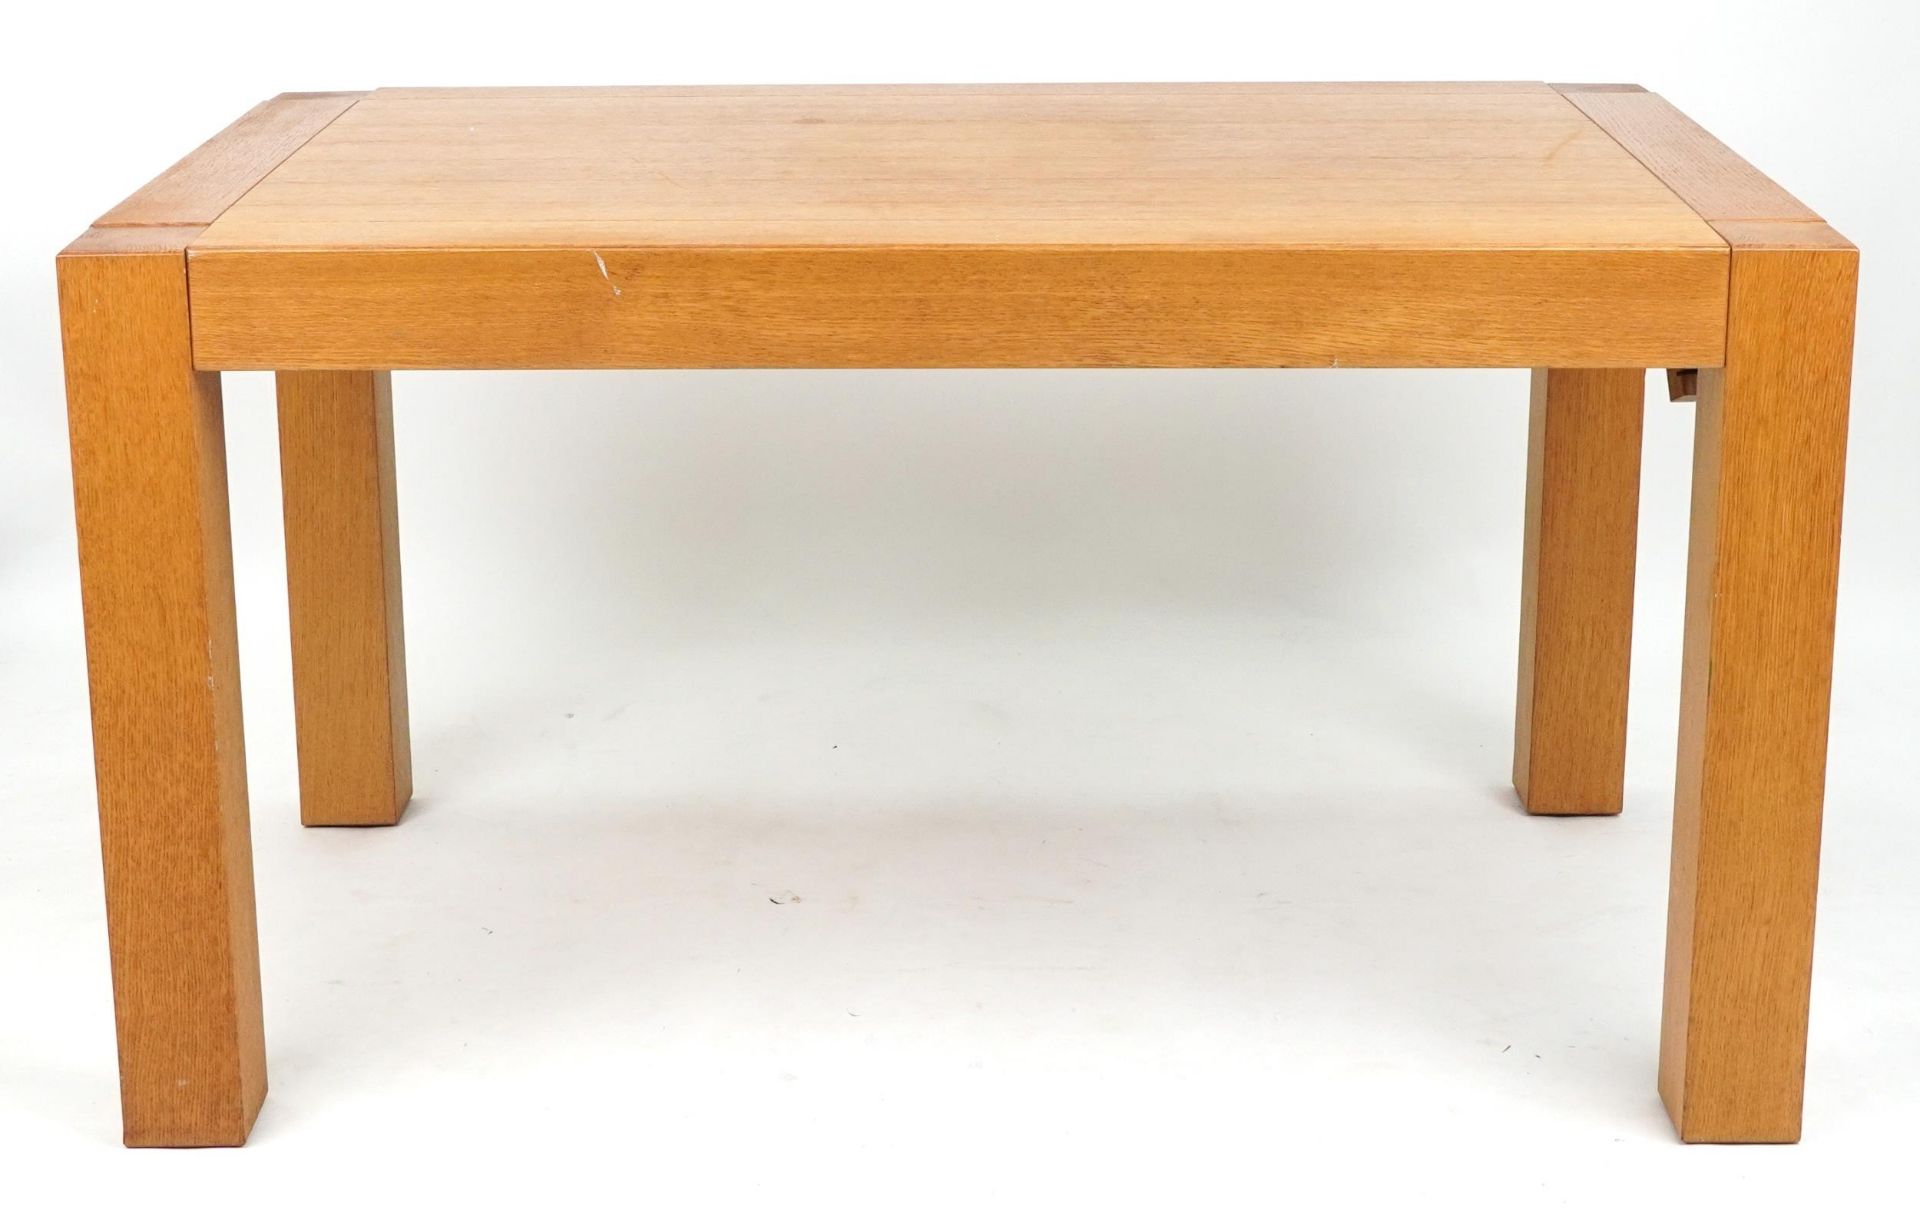 Contemporary light oak G Plan dining table, 76cm H x 142cm W x 90cm D - Image 3 of 4